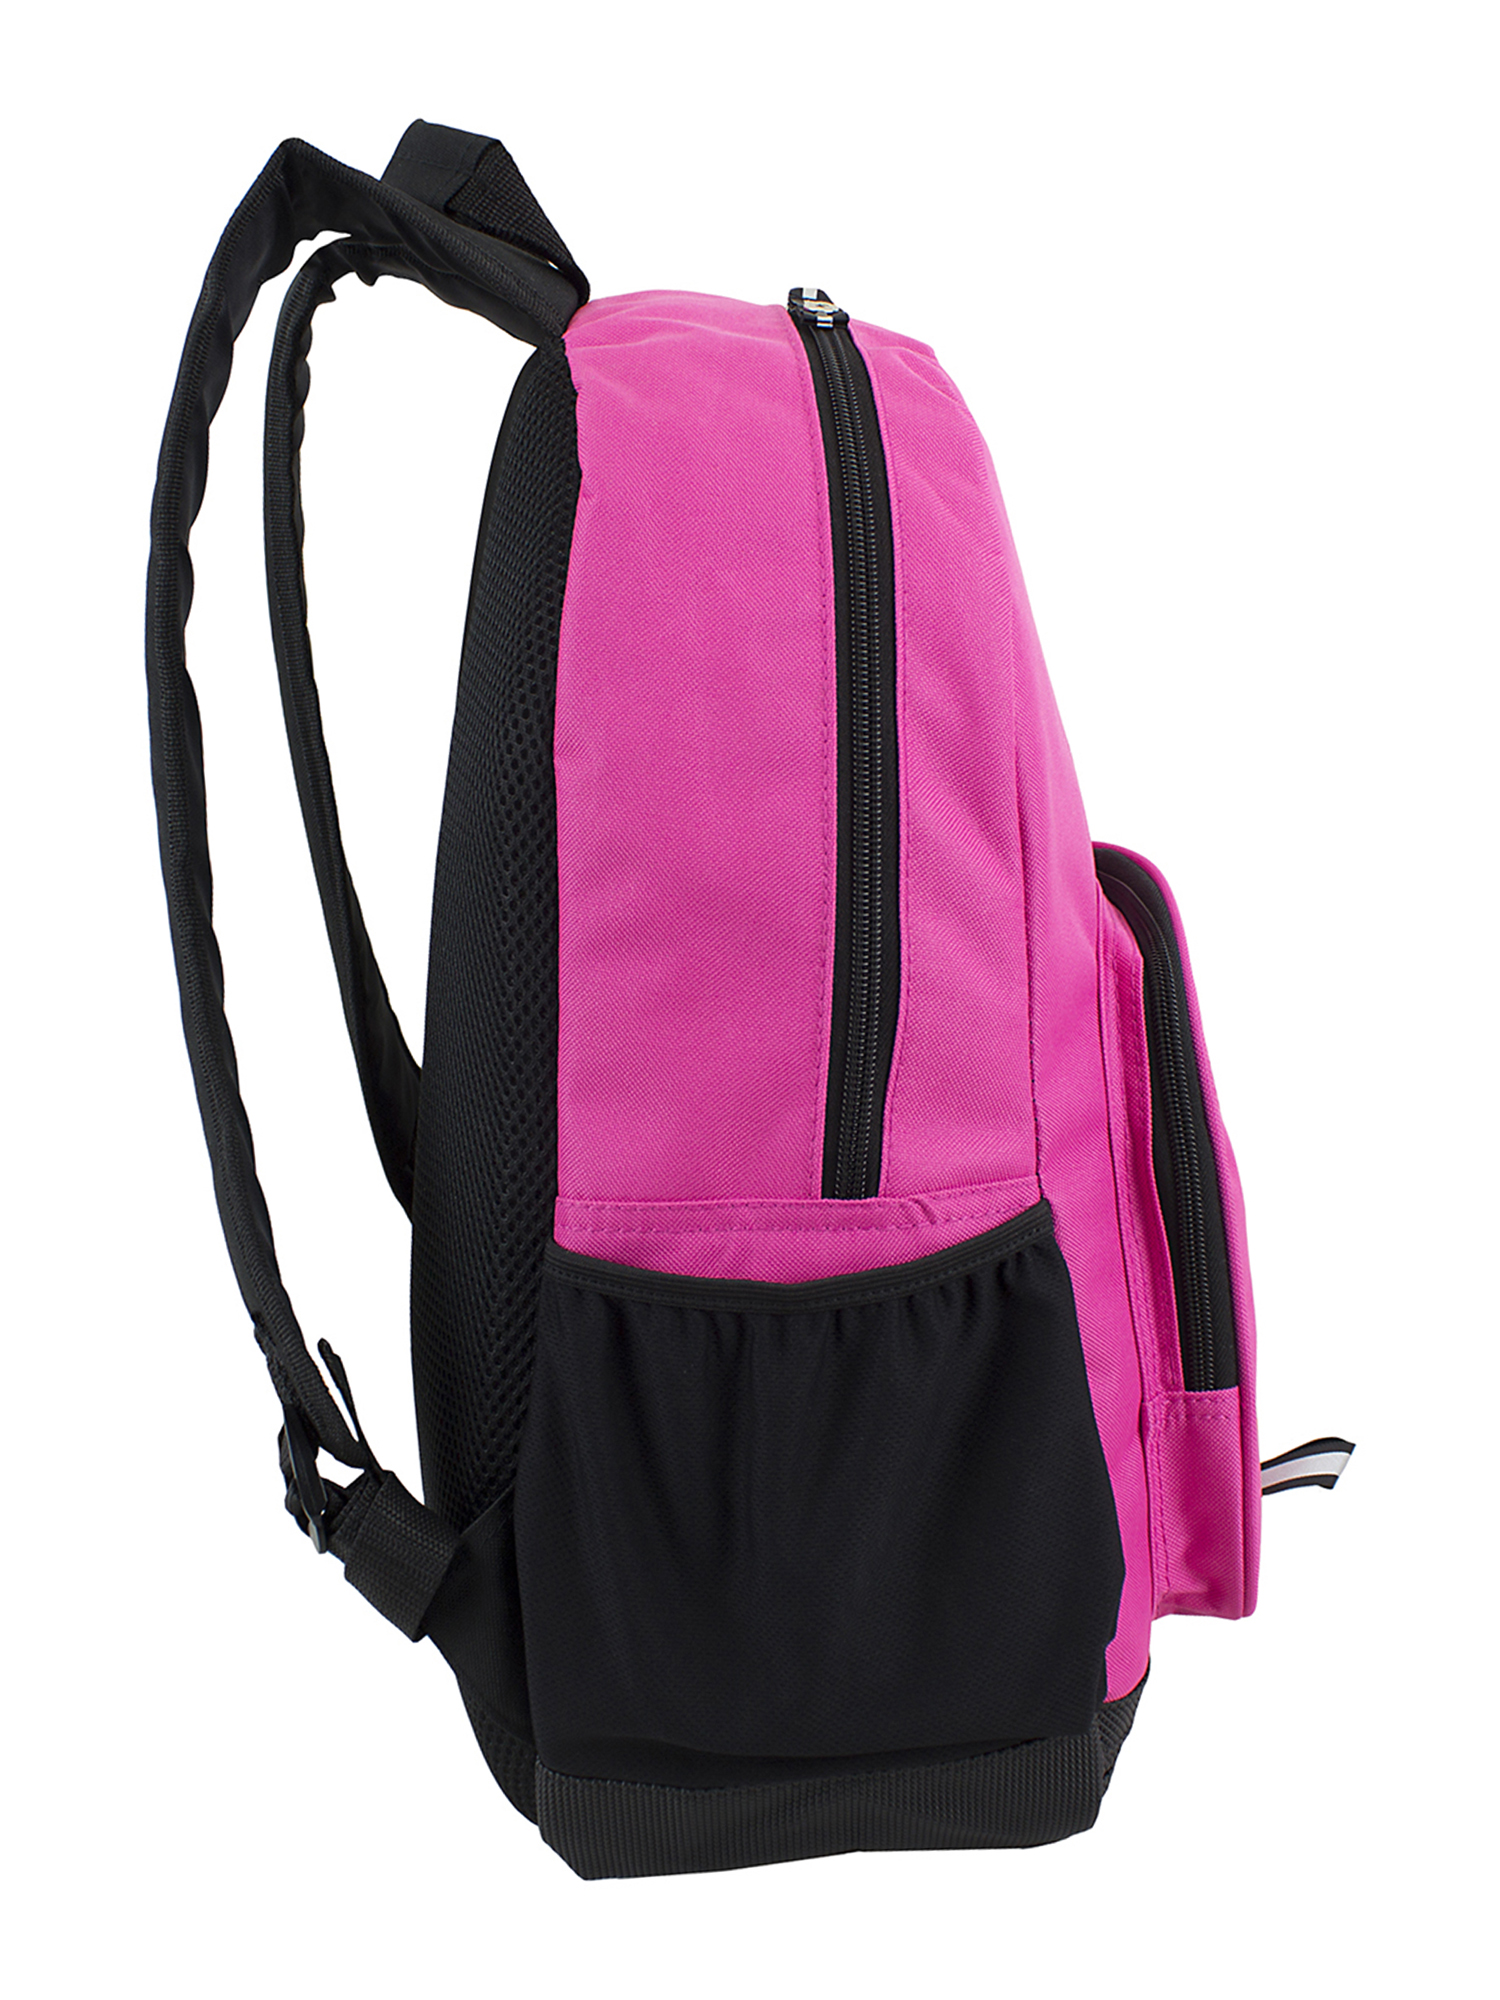 Eastsport Unisex Classic Backpack with Bonus Drawstring Bag Pink - image 3 of 6